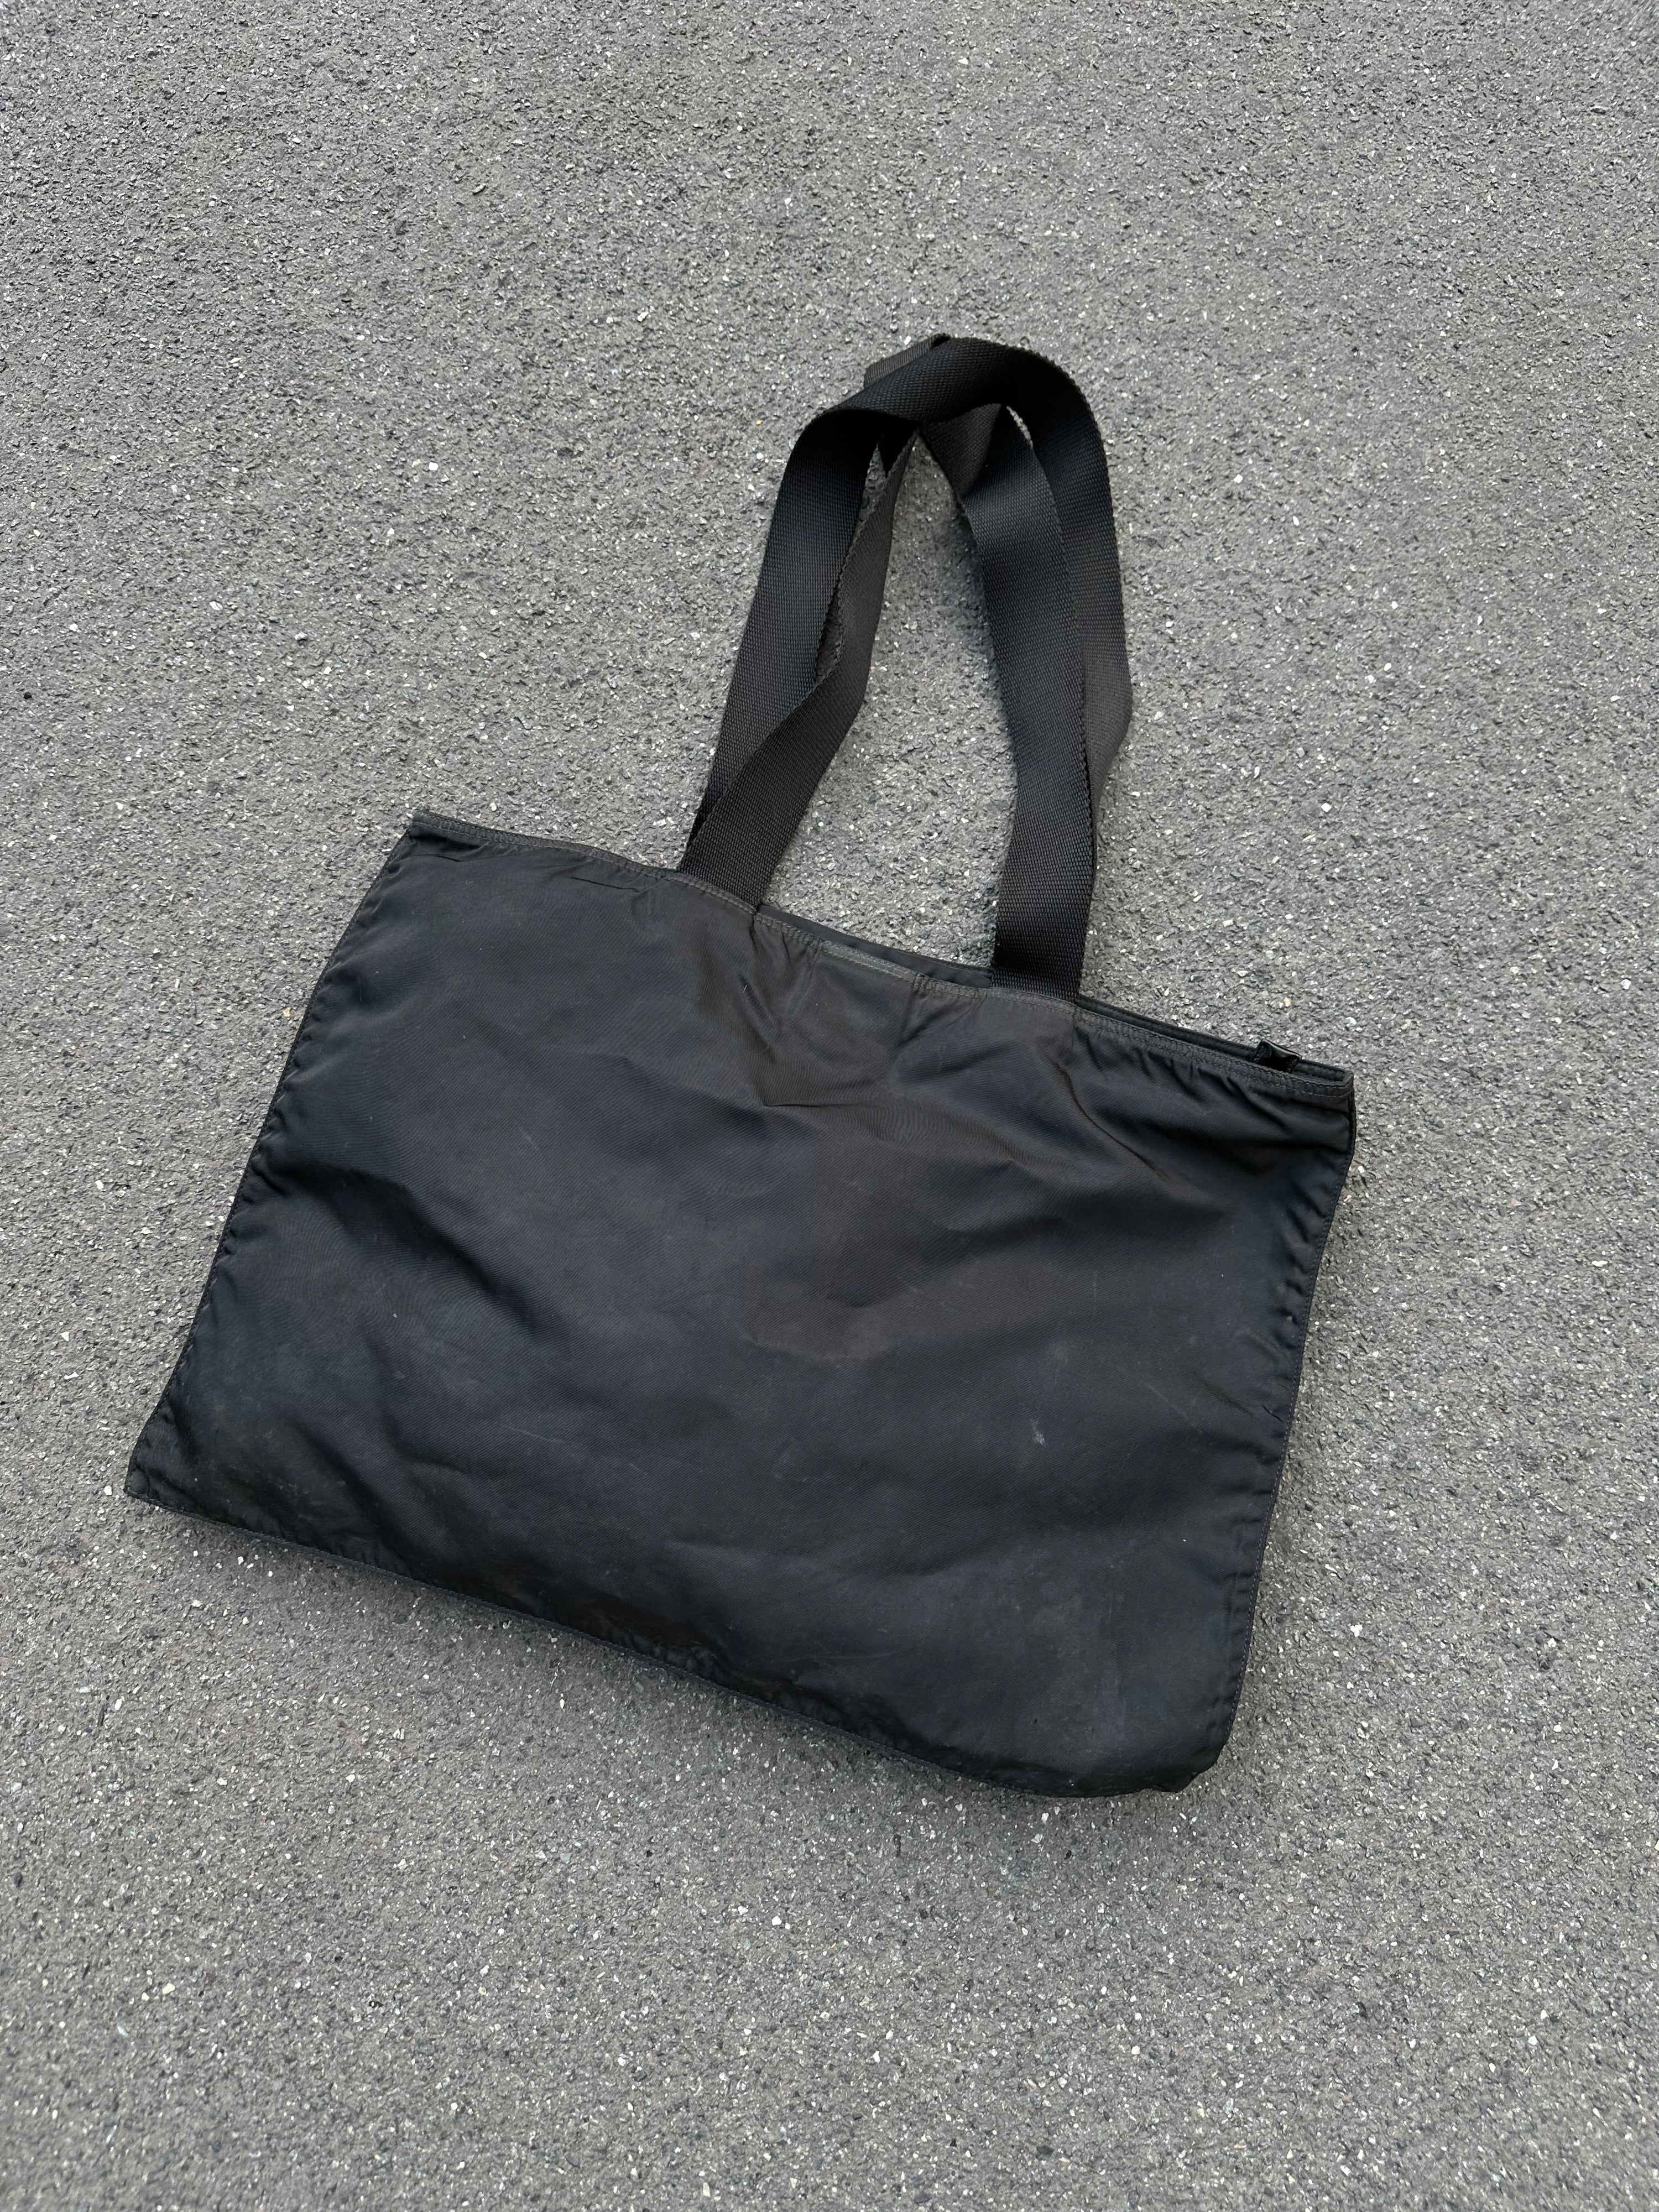 Early 2000s Prada Shopping / Tote Bag